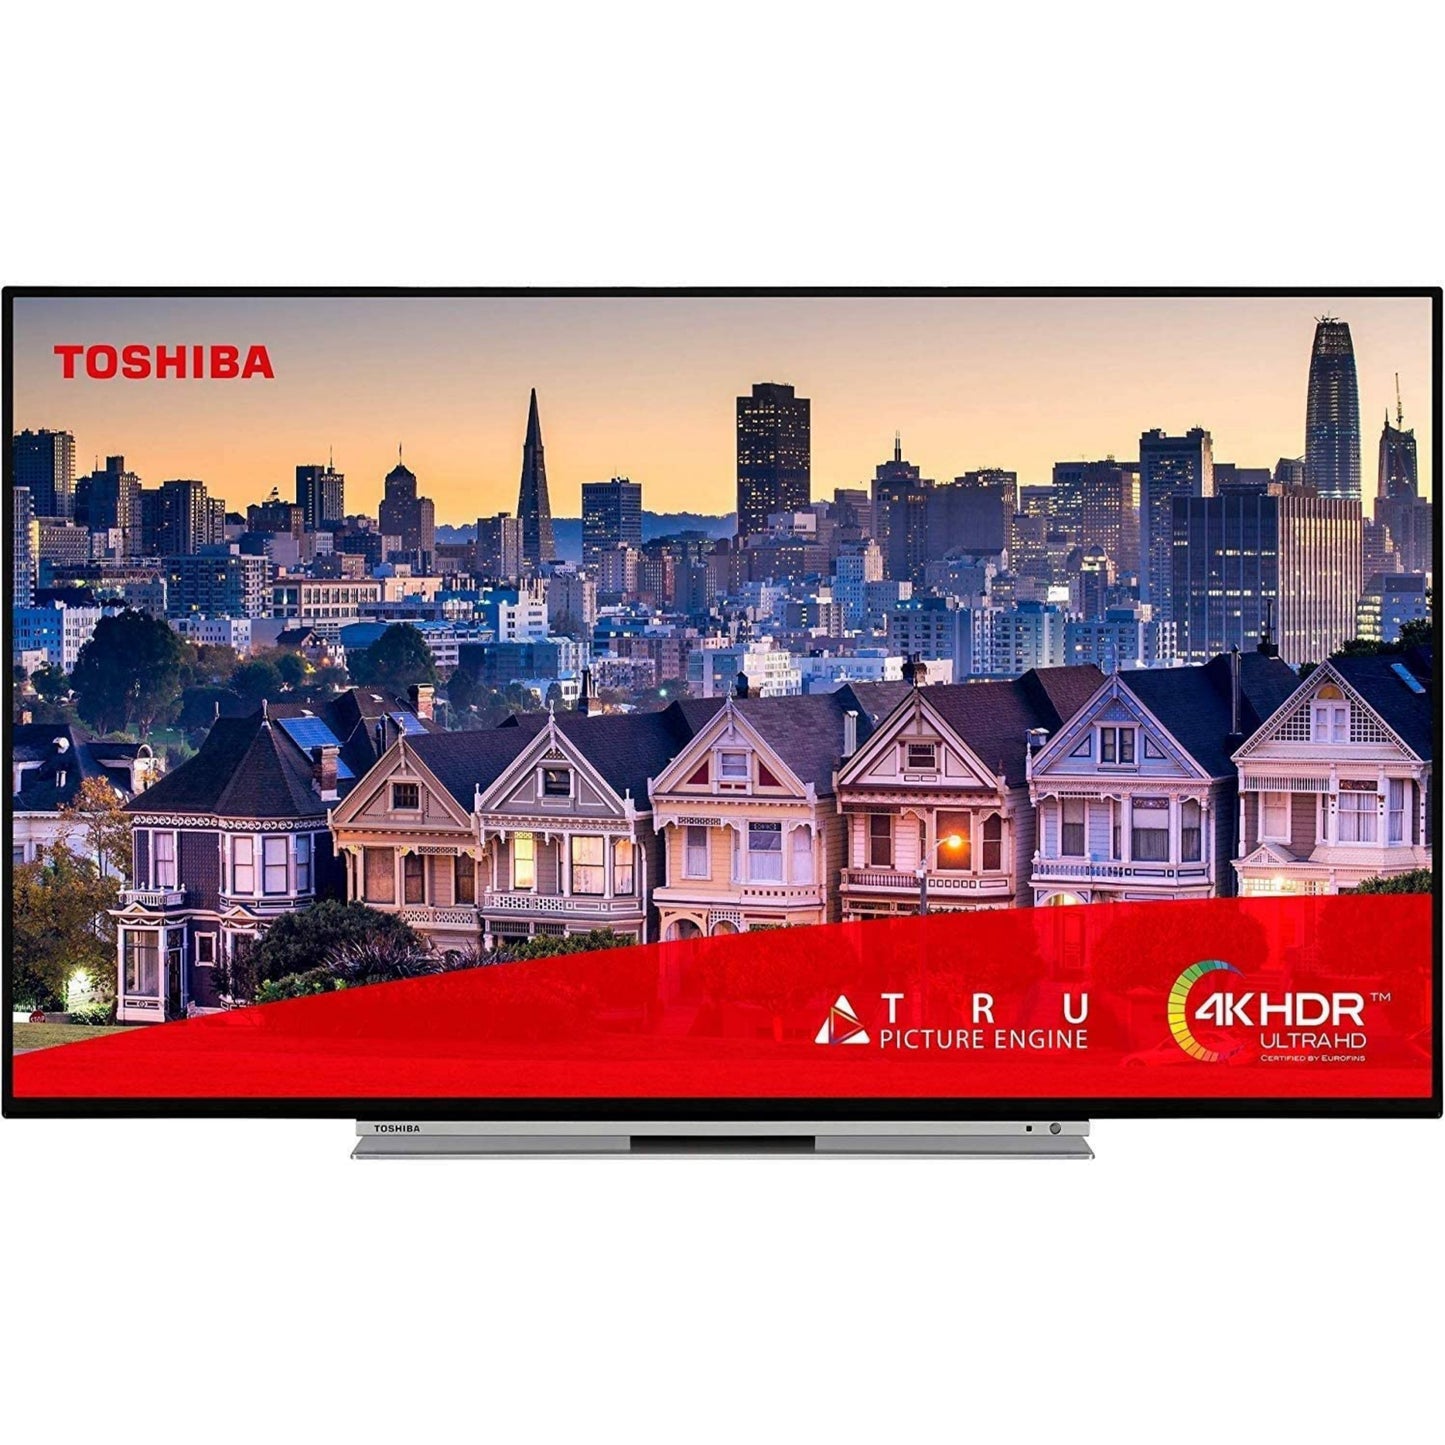 Toshiba 50 inch Smart 4K UHD LED TV - London Used